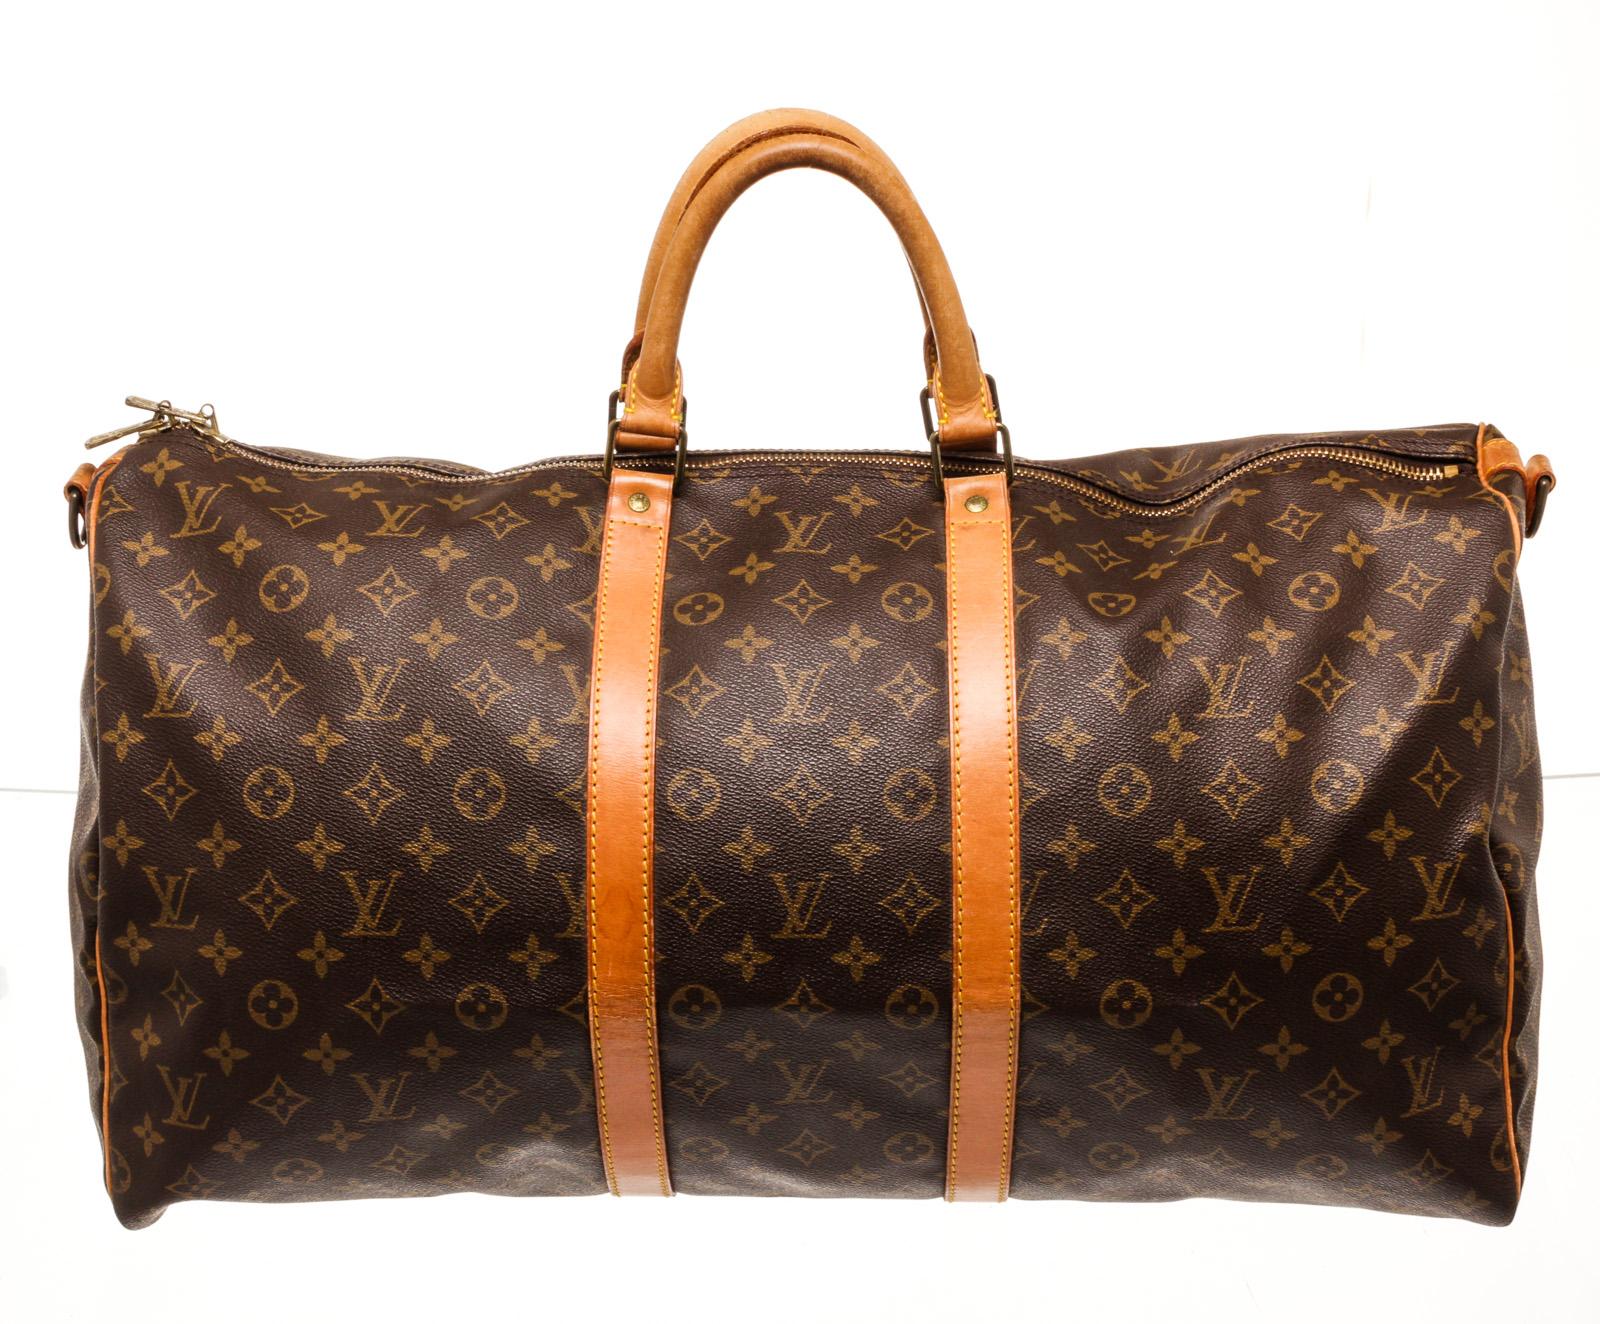 Louis Vuitton Brown Monogram Keepall 55cm Travel Bag with material monogram canvas, gold-toneÂ hardware, trim tan vachetta leather, dual top handle, shoulder strapÂ and zipperÂ closure.

37376MSC